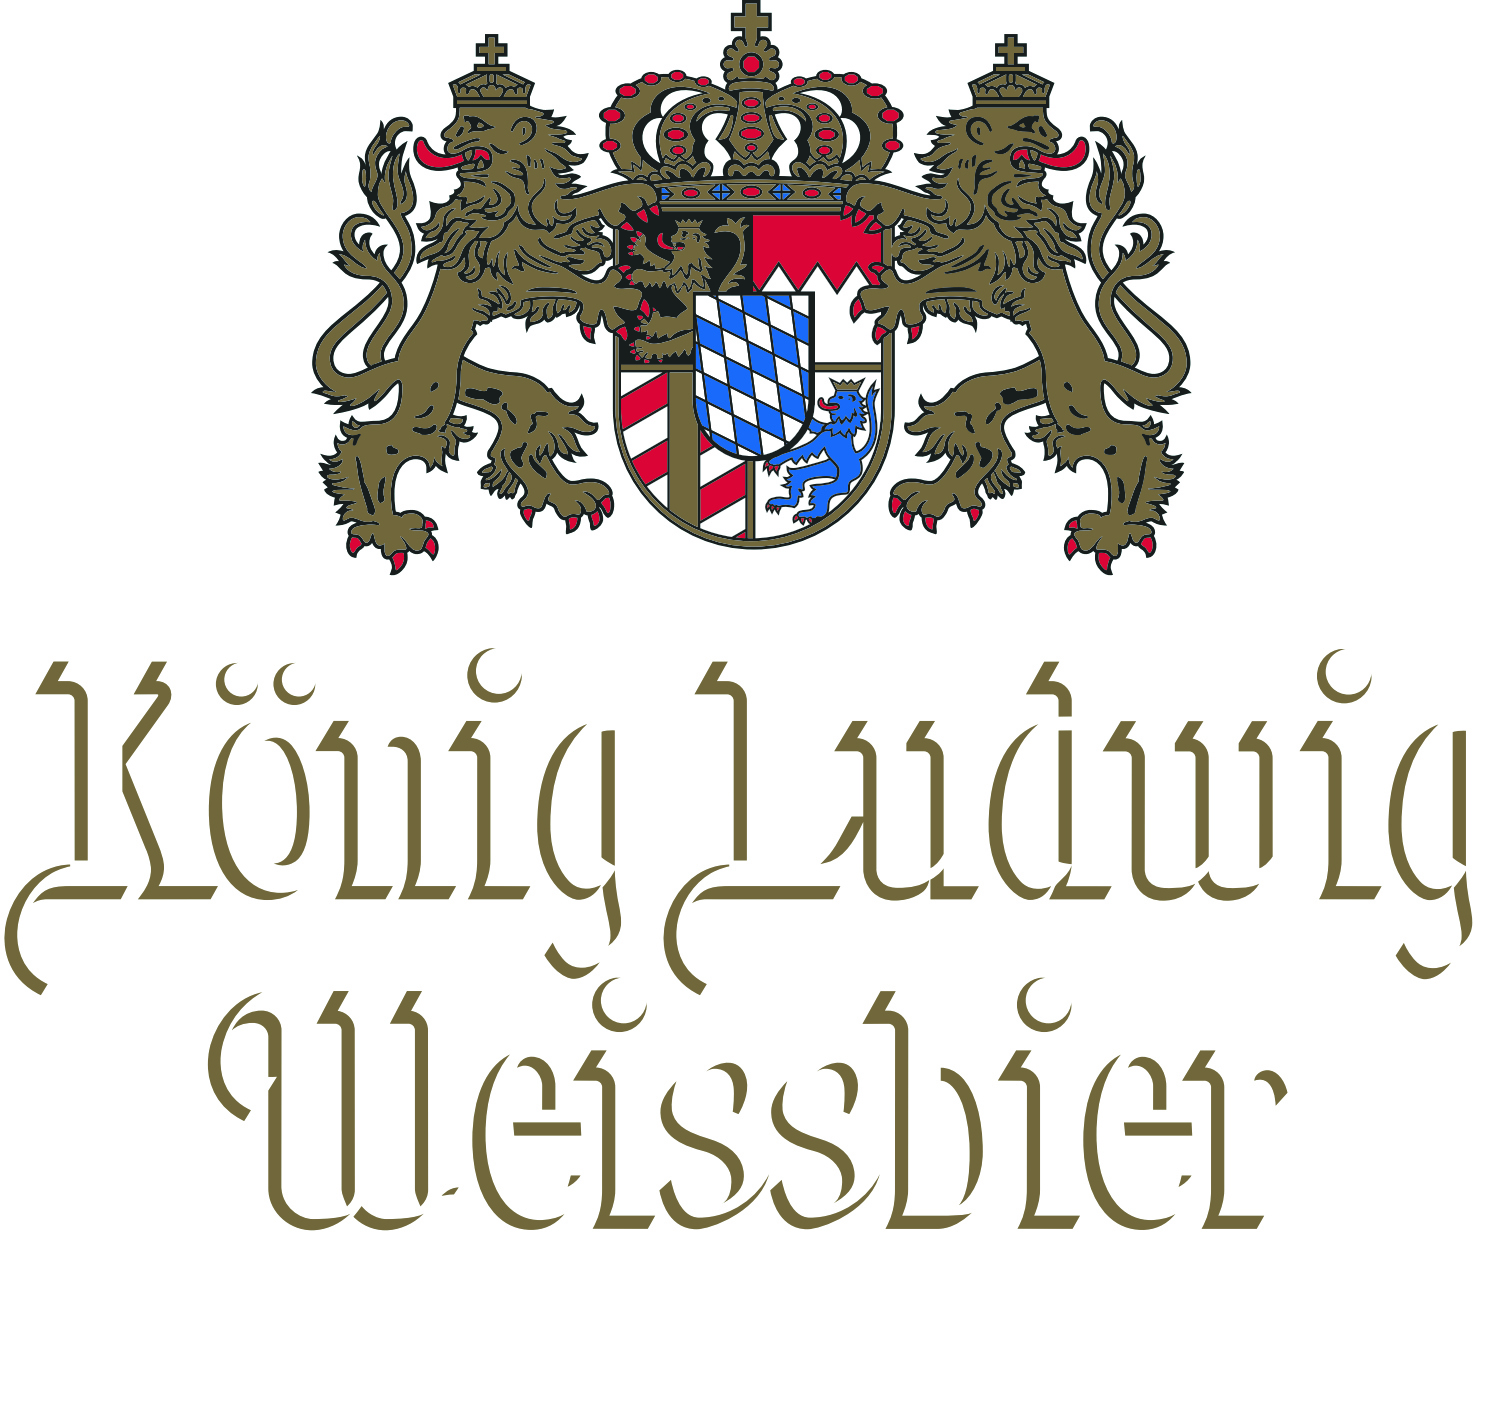 60079 Konig Ludwig weissbier hell fust 20 liter